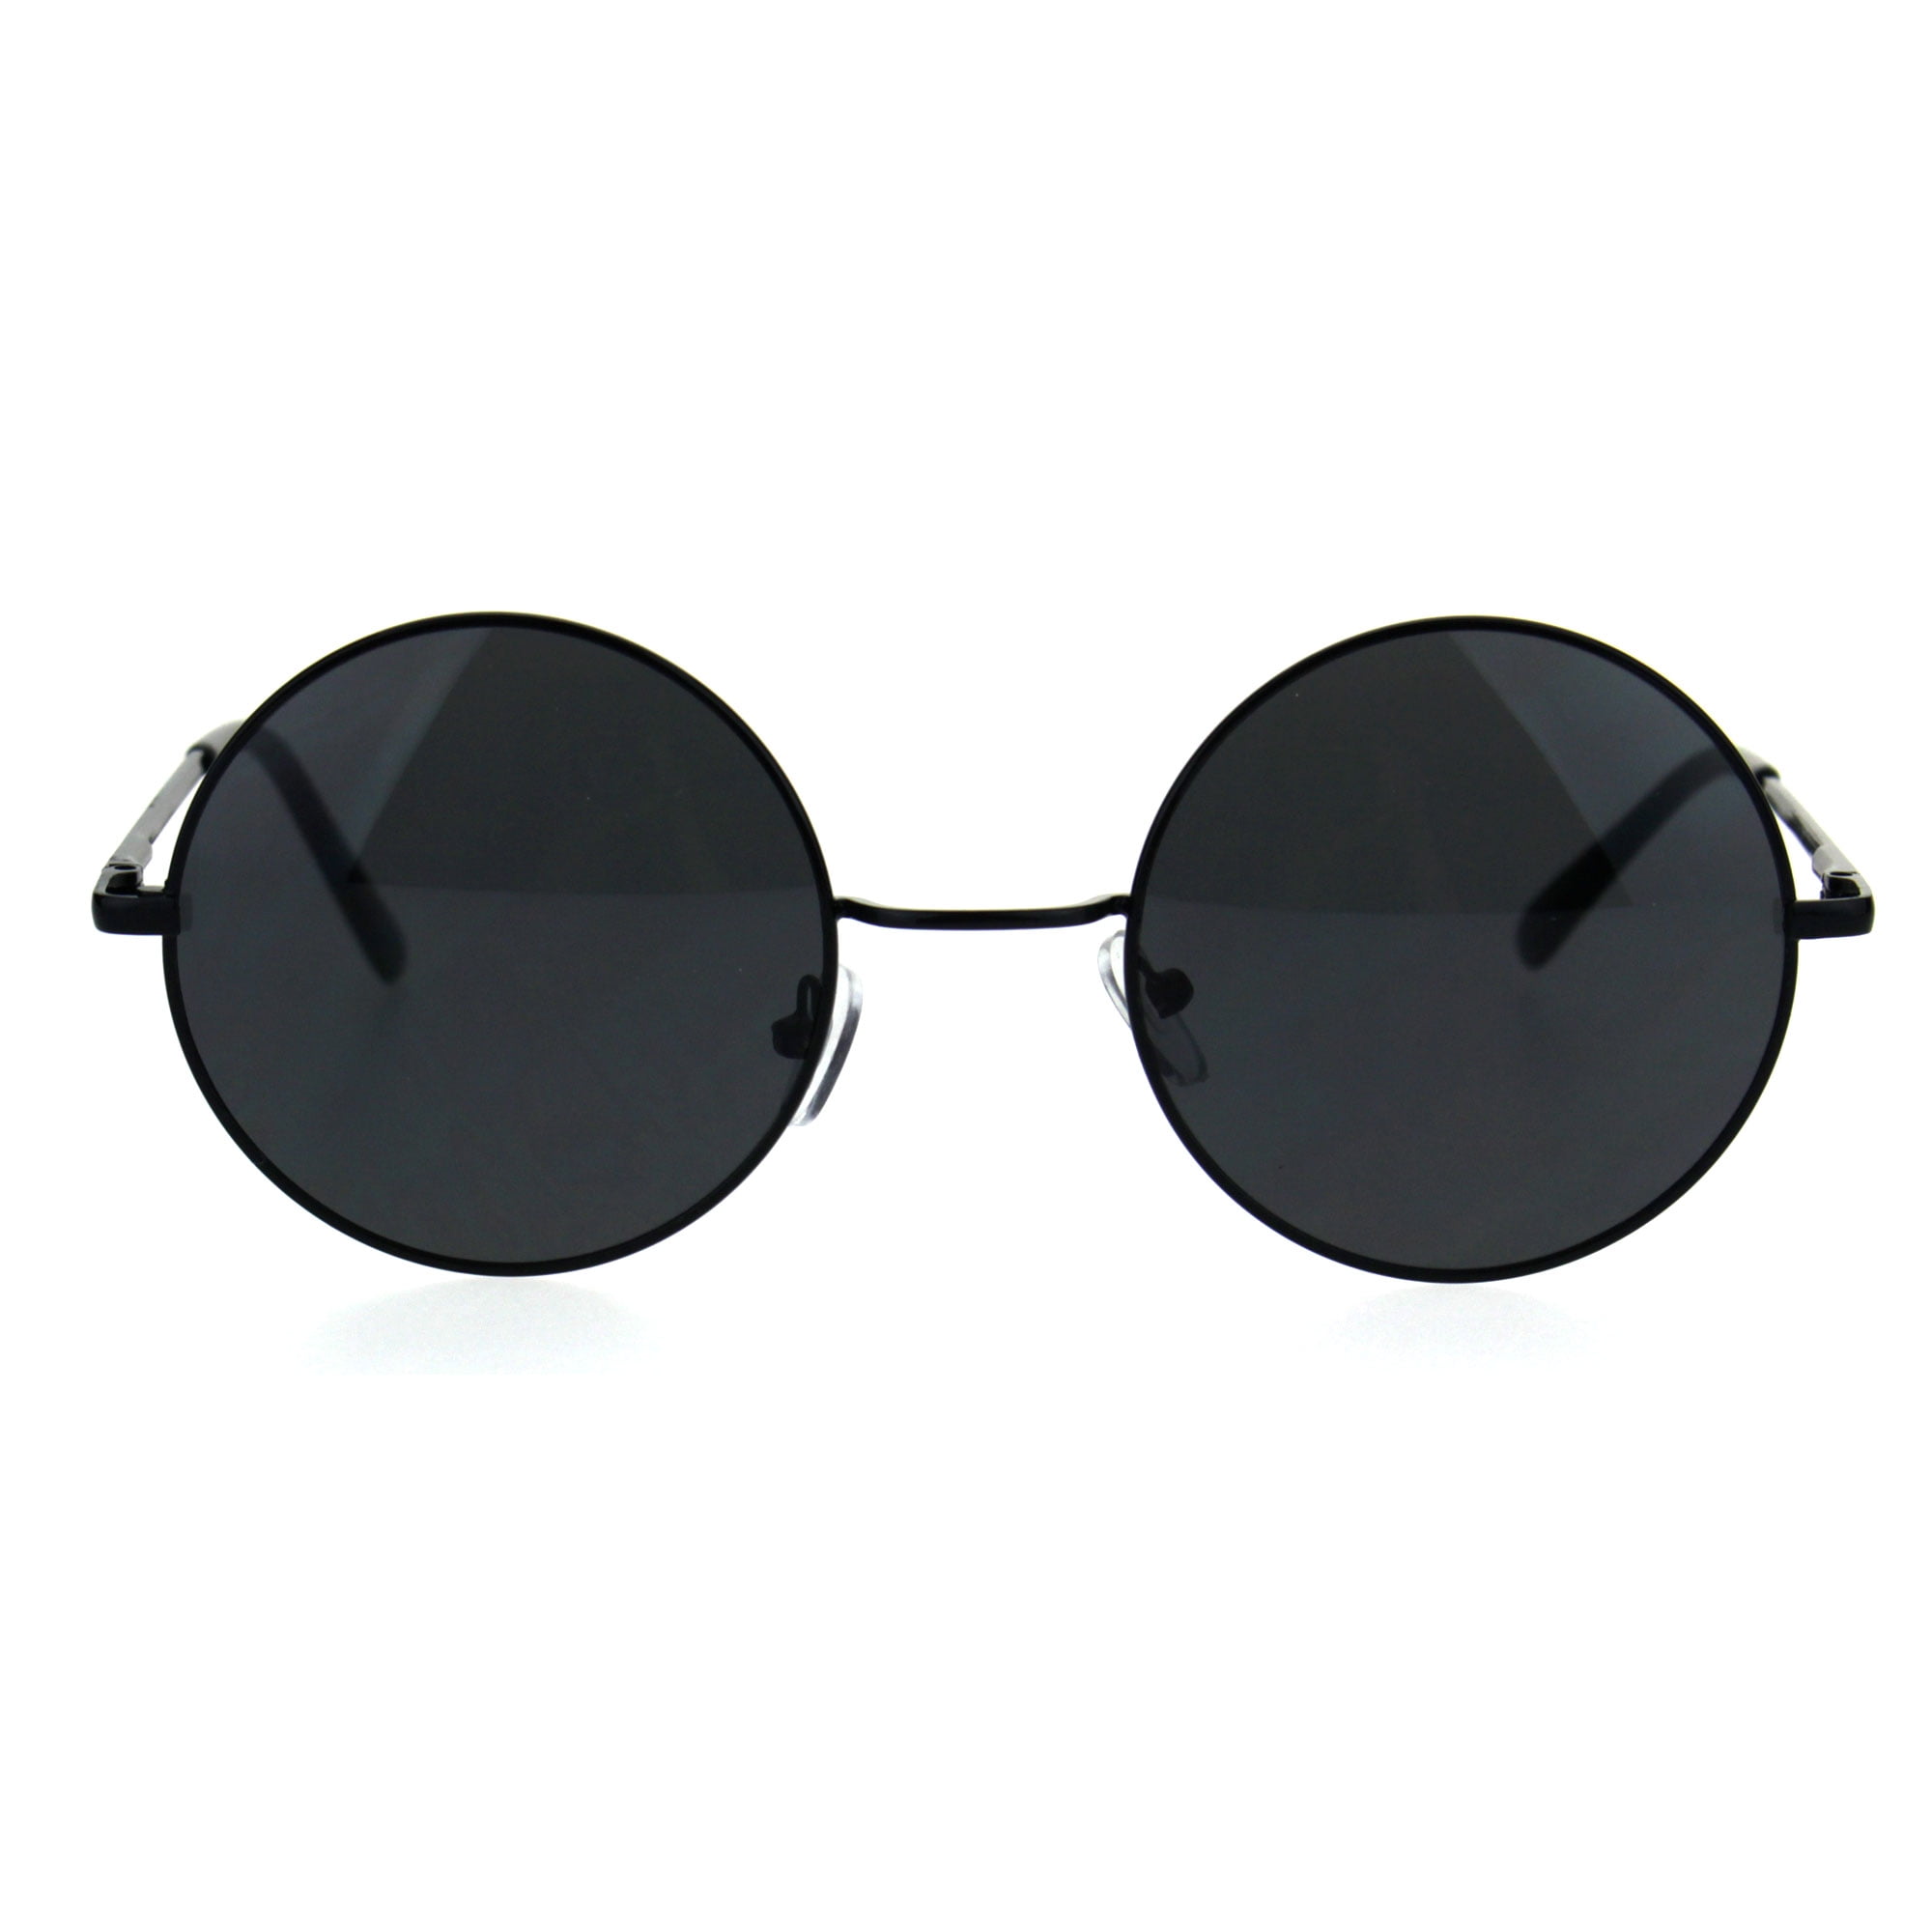 where to buy circle sunglasses